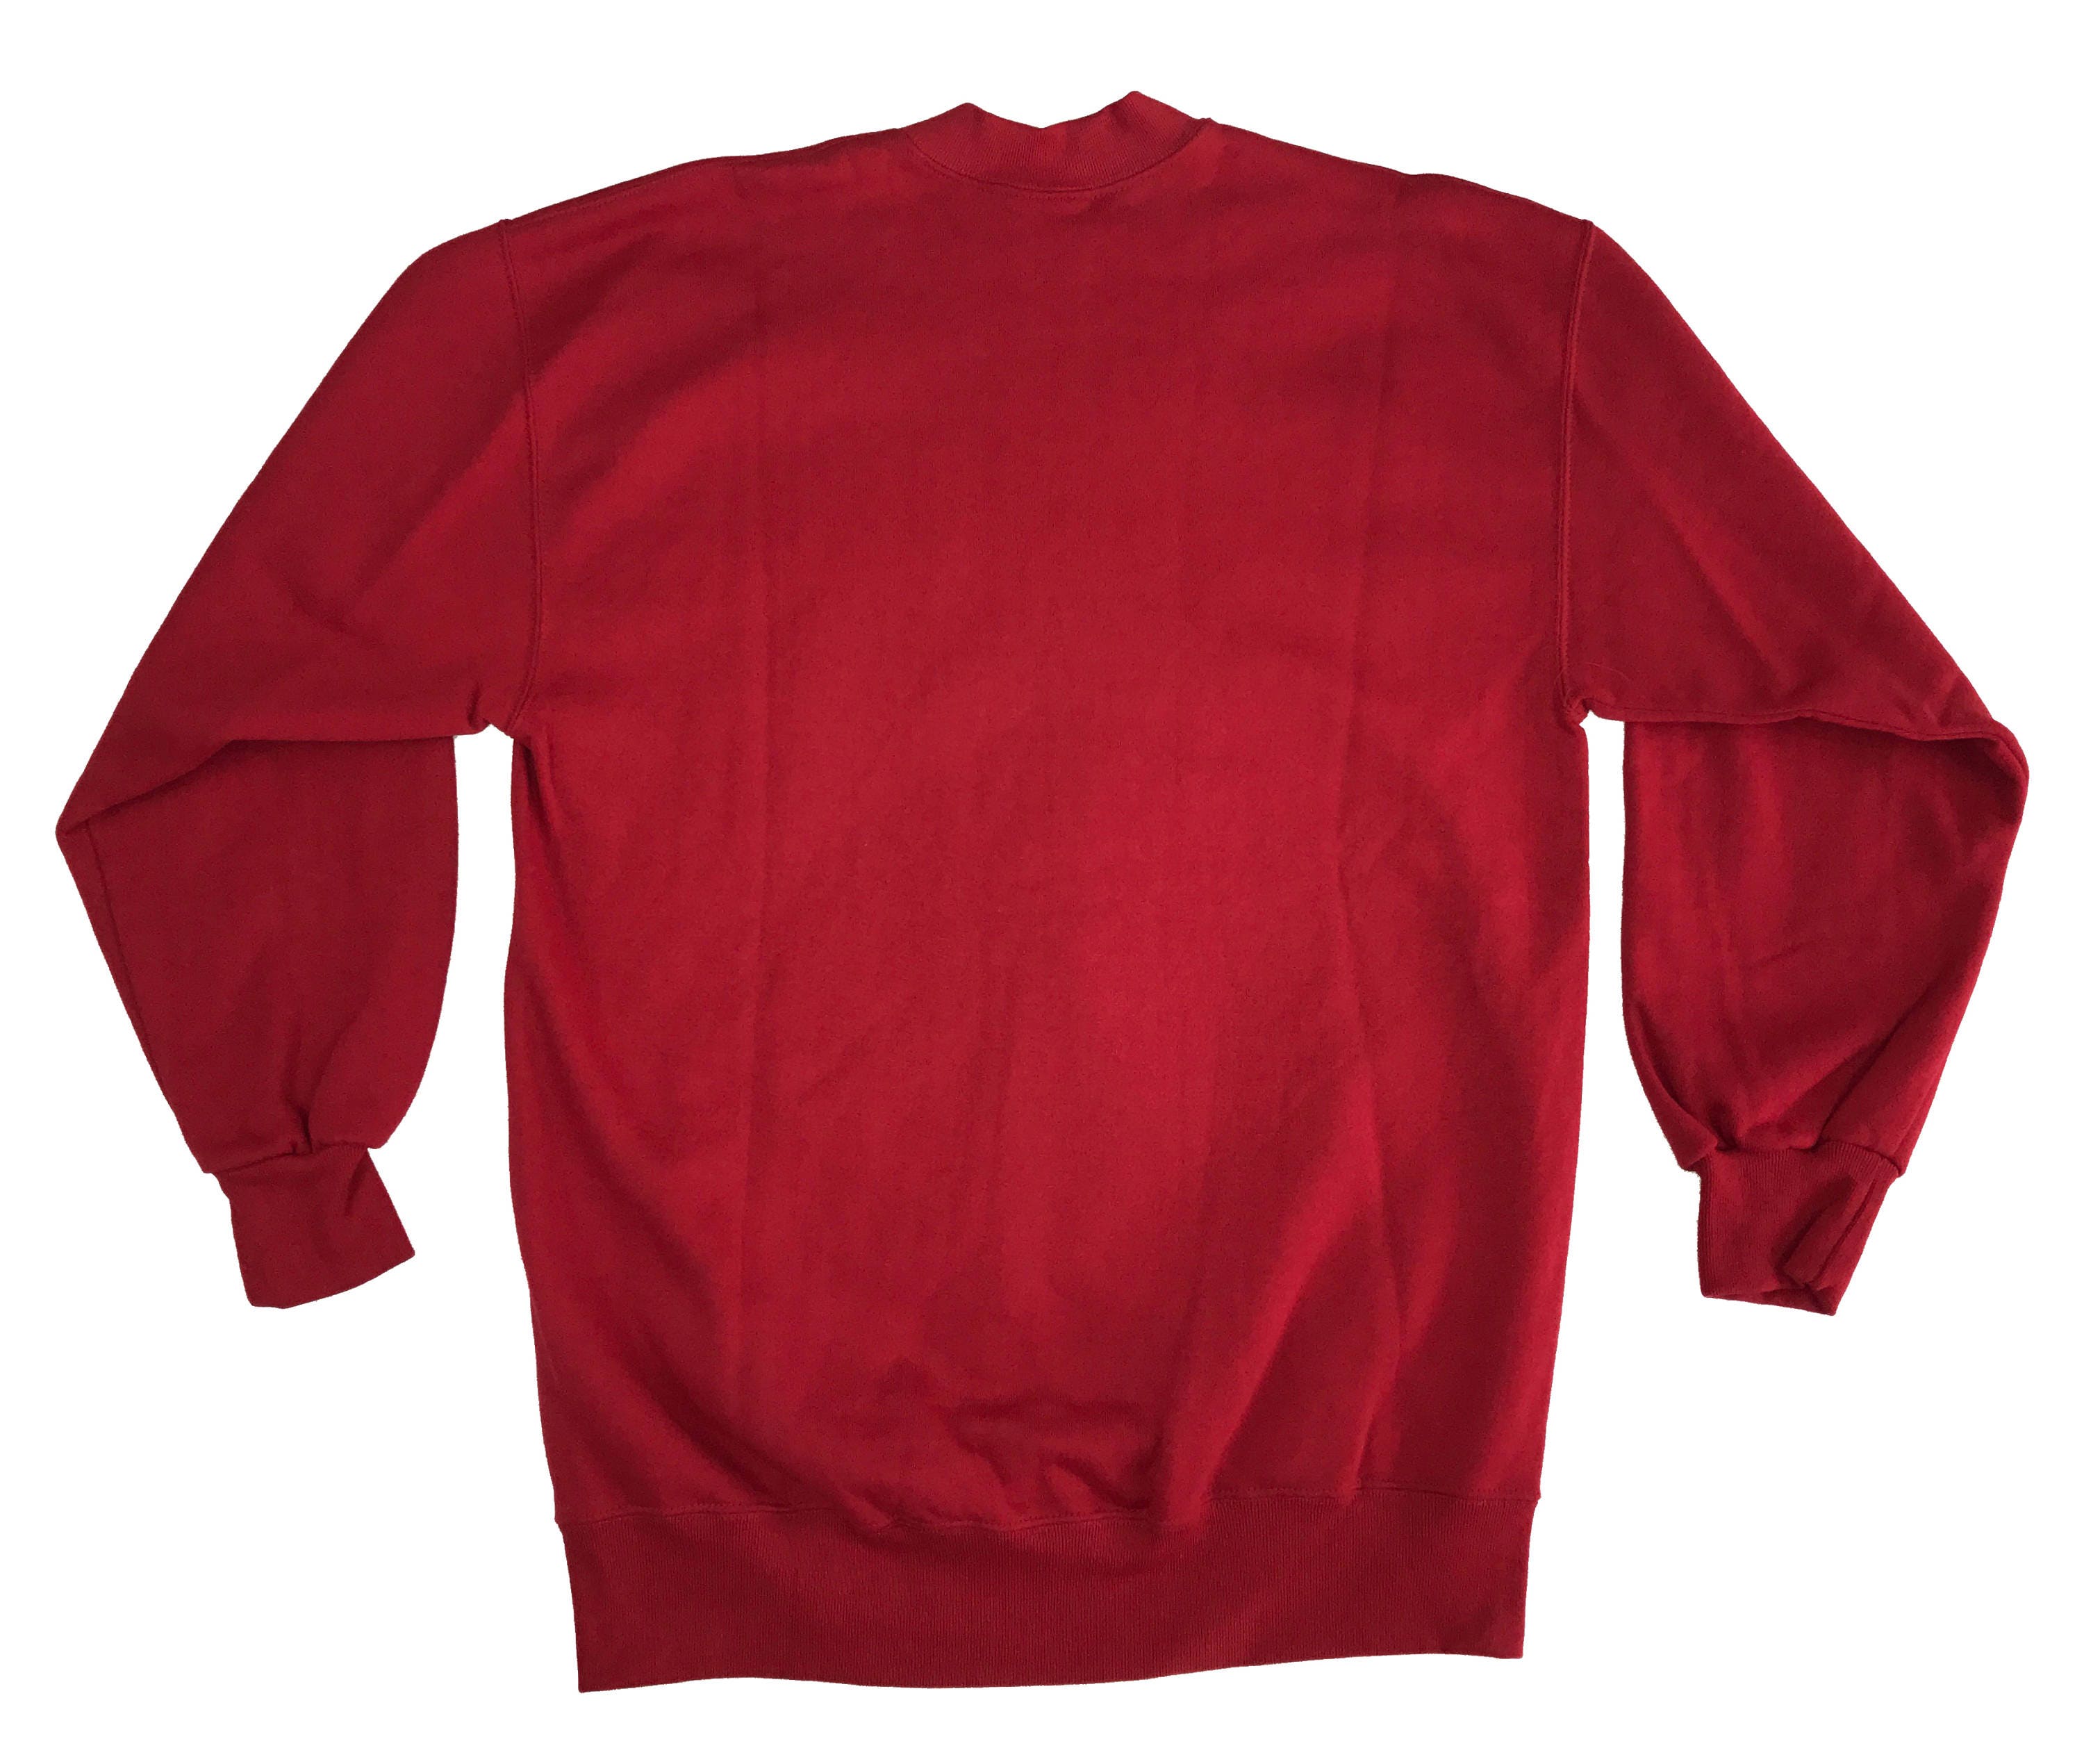 1992 Alabama Crimson Tide National Championship Nutmeg Sweatshirt XL